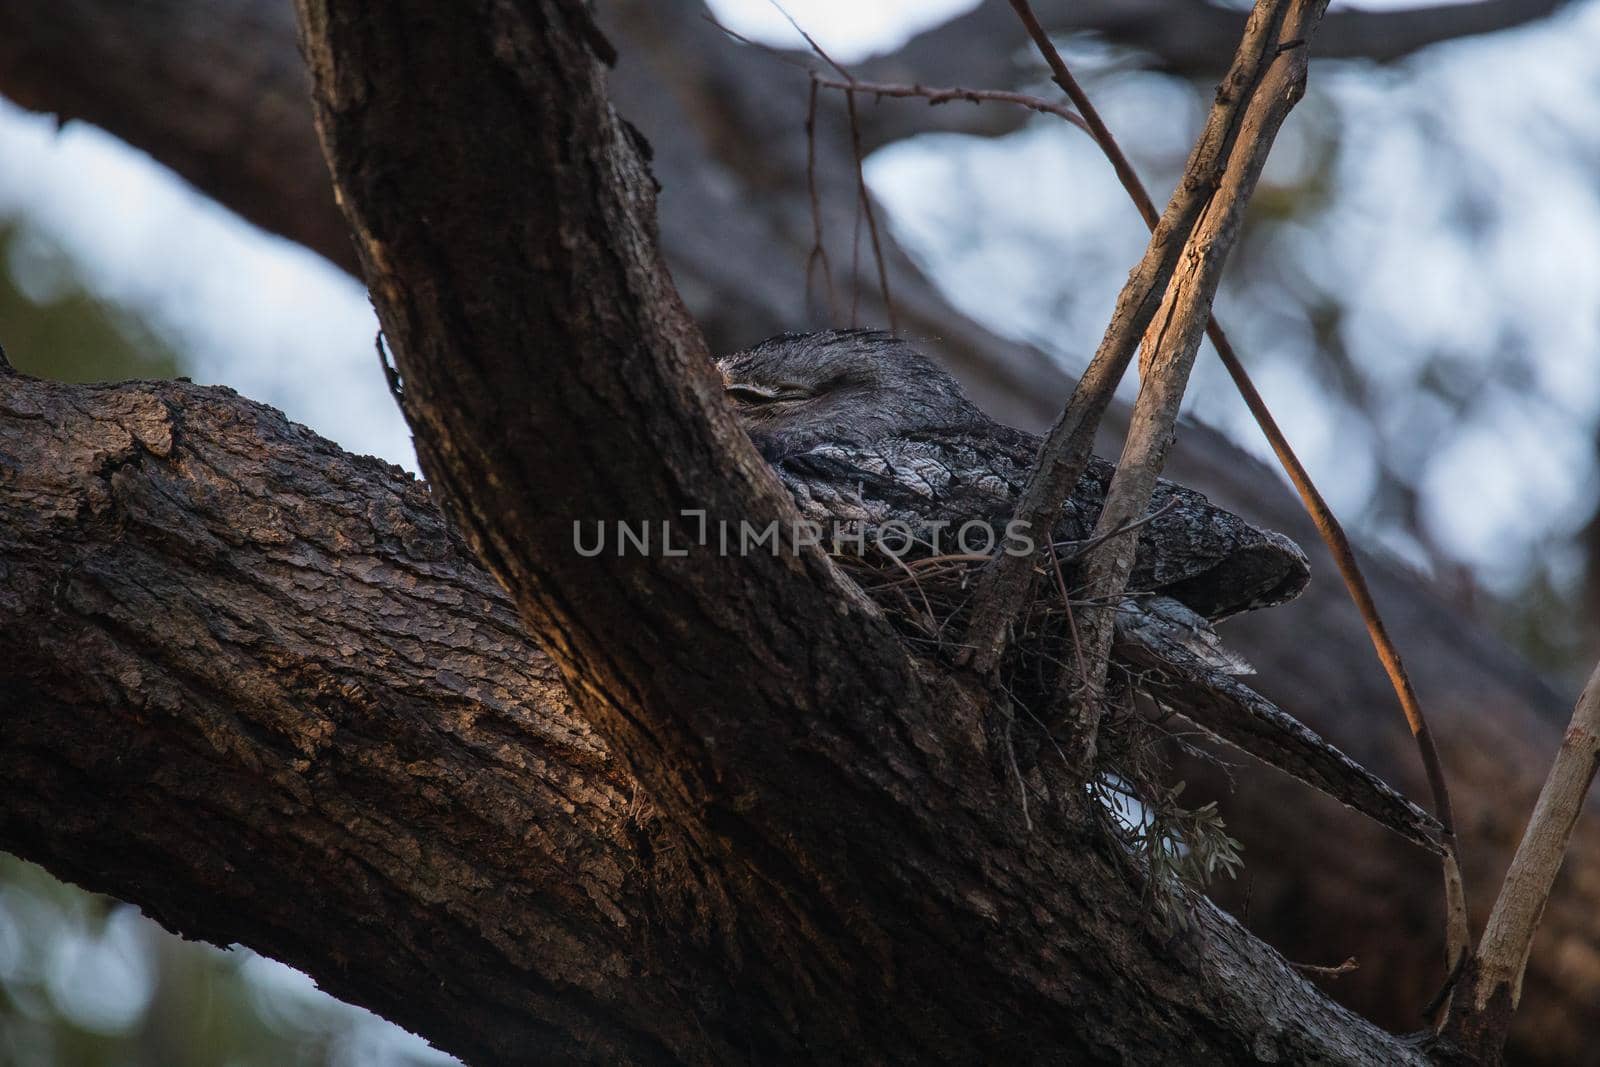 Tawny Frogmouth resting on tree branch by braydenstanfordphoto